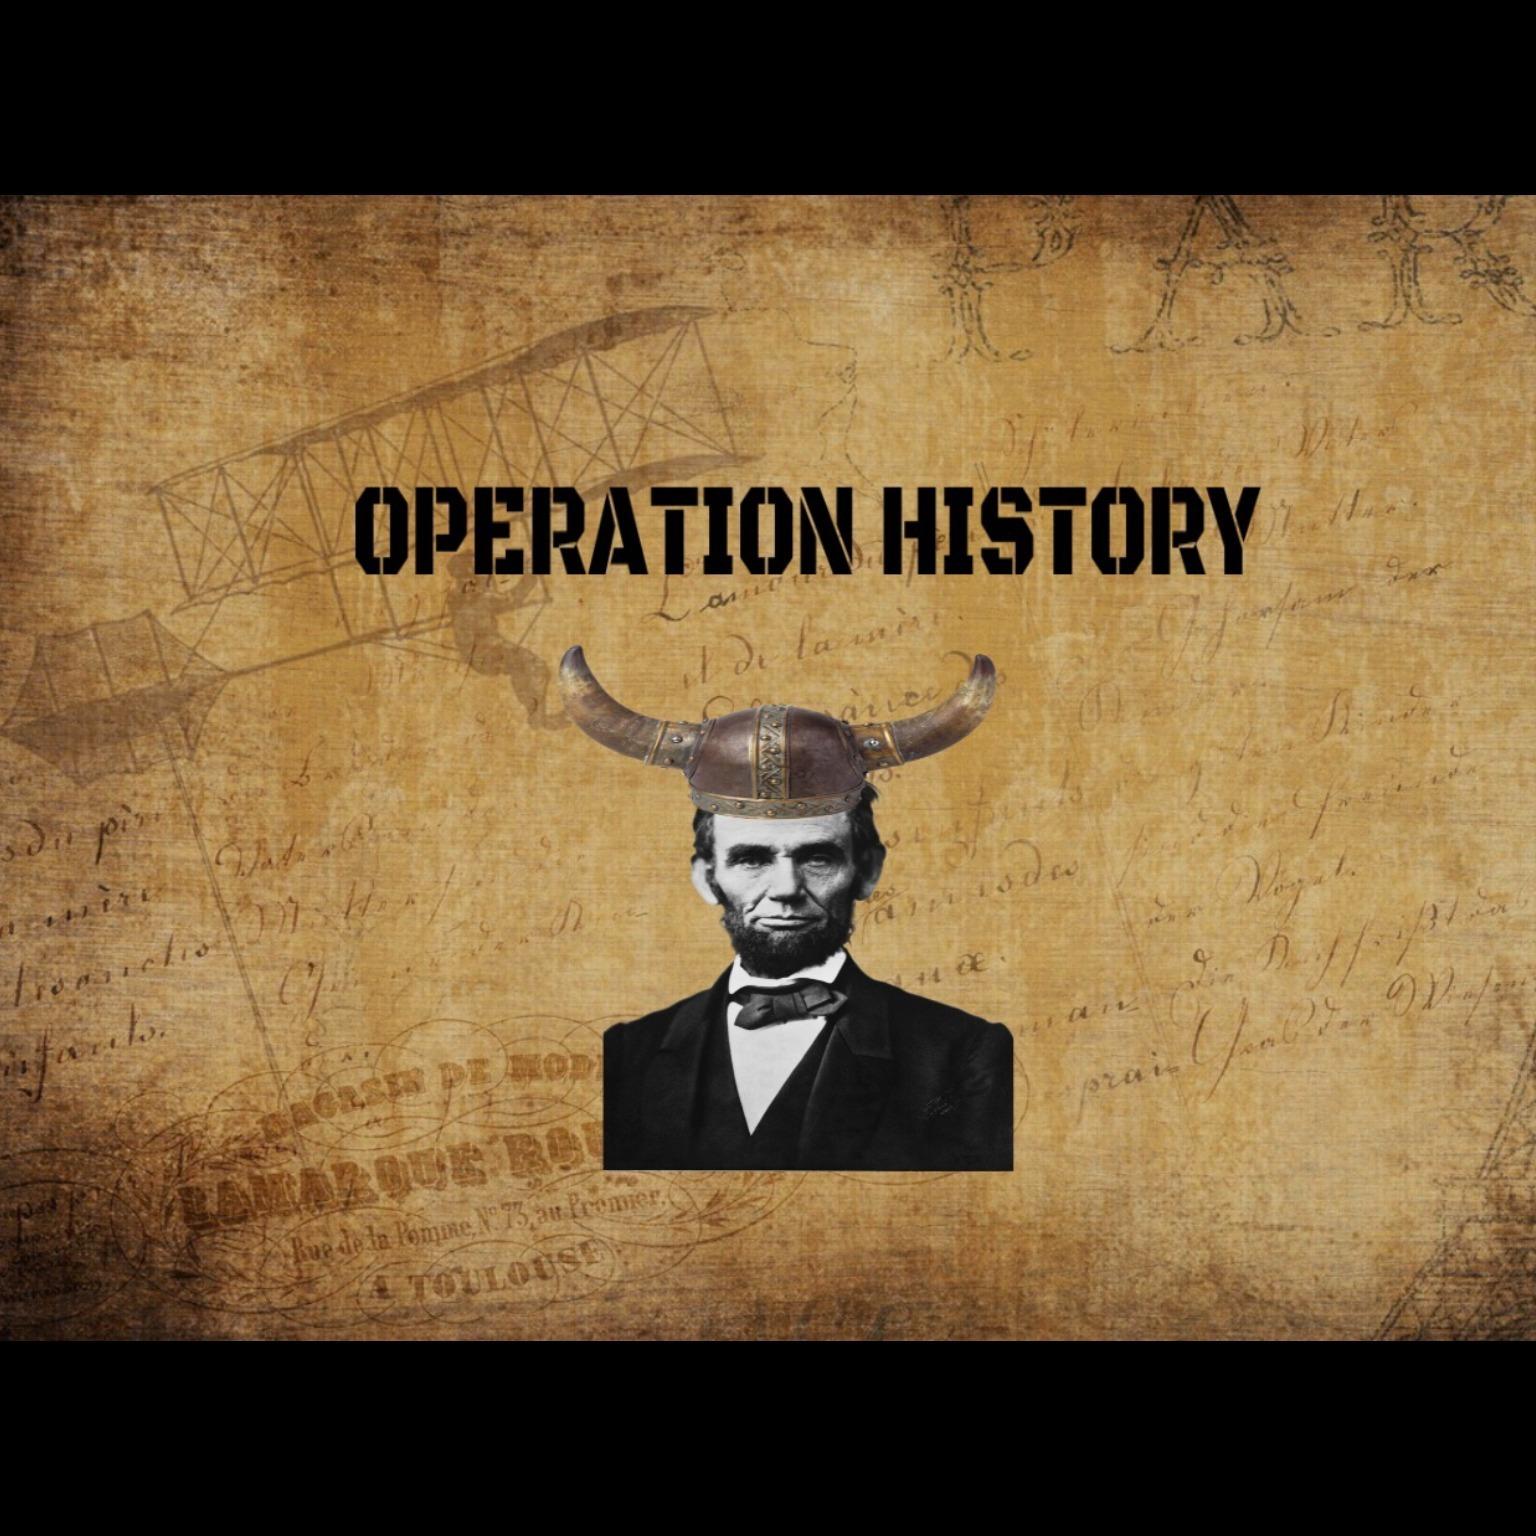 Operation History